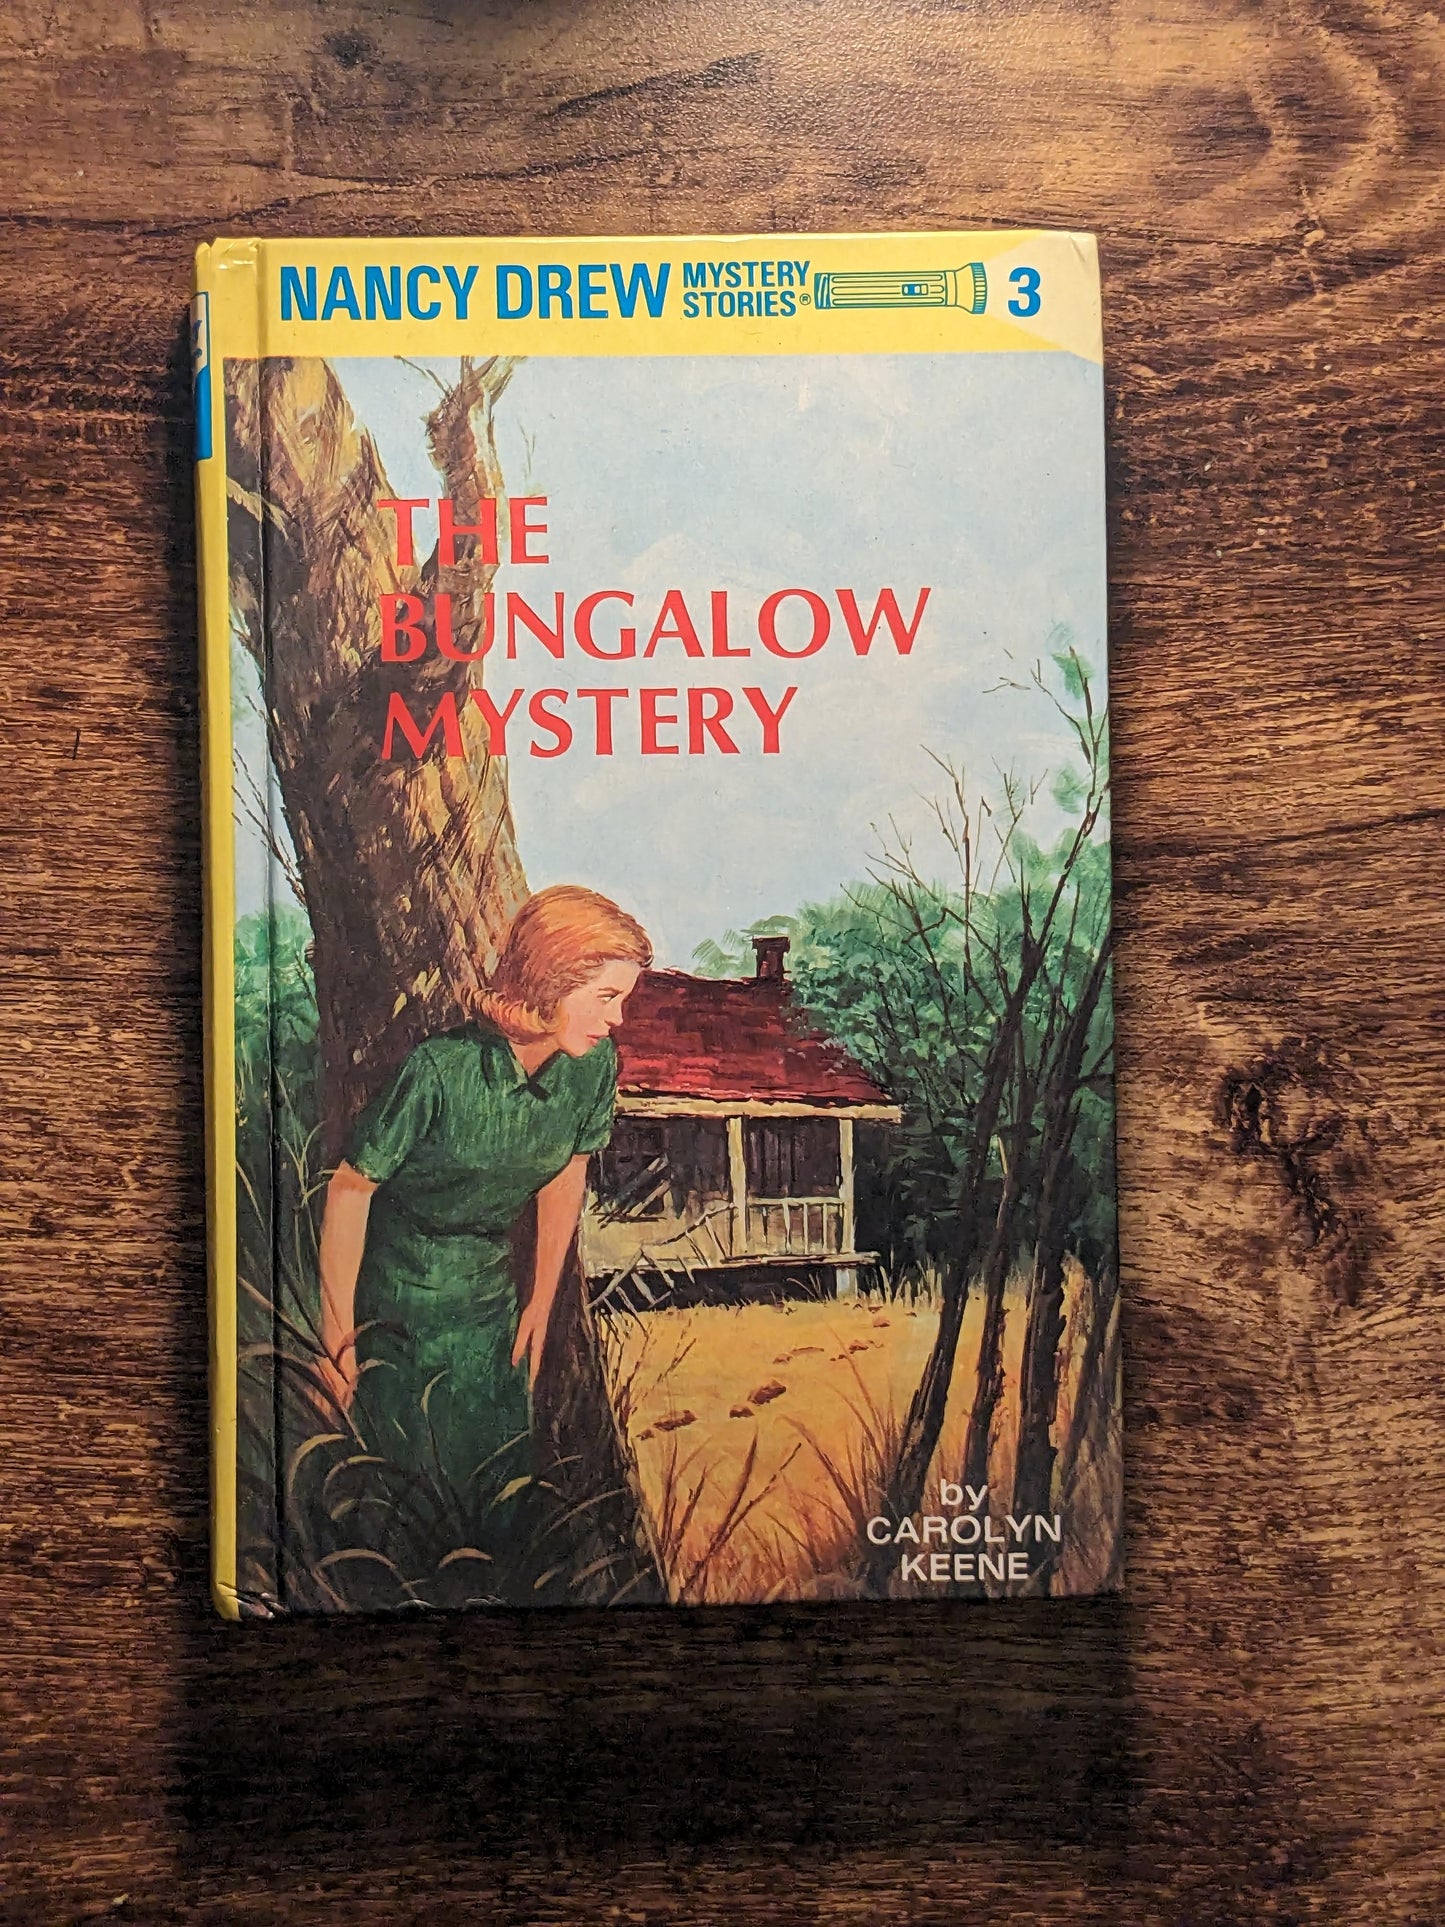 Bungalow Mystery, The (Nancy Drew #3) by Carolyn Keene - Vintage Hardcover